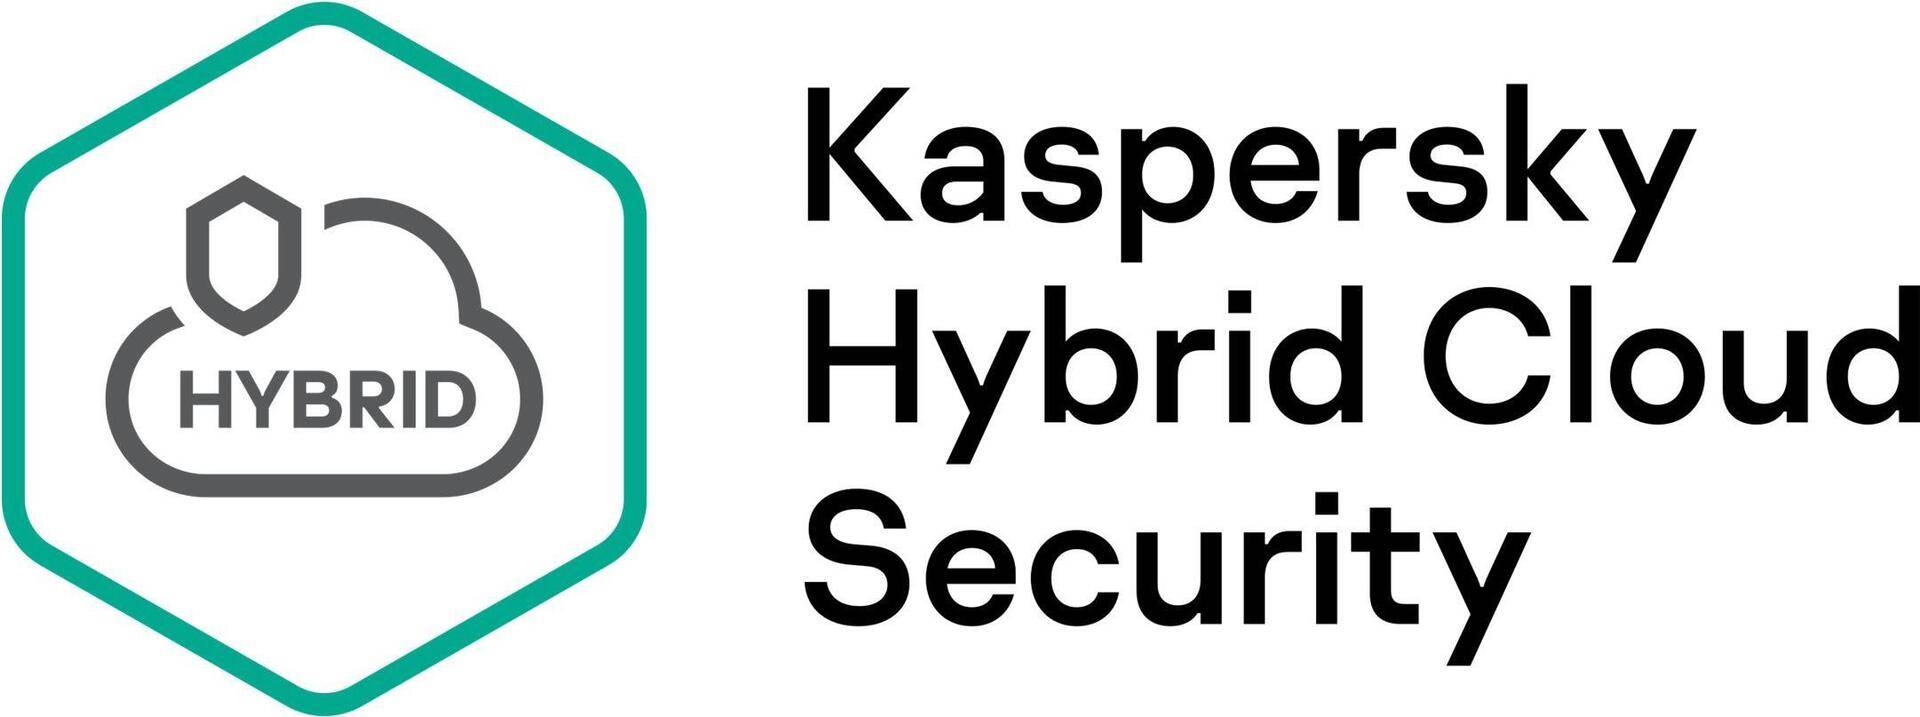 Kaspersky Hybrid Cloud Security Enterprise CPU European Edi. 20-24 CPU 3-Year Renewal License (KL4553XANTR) von Kaspersky Lab